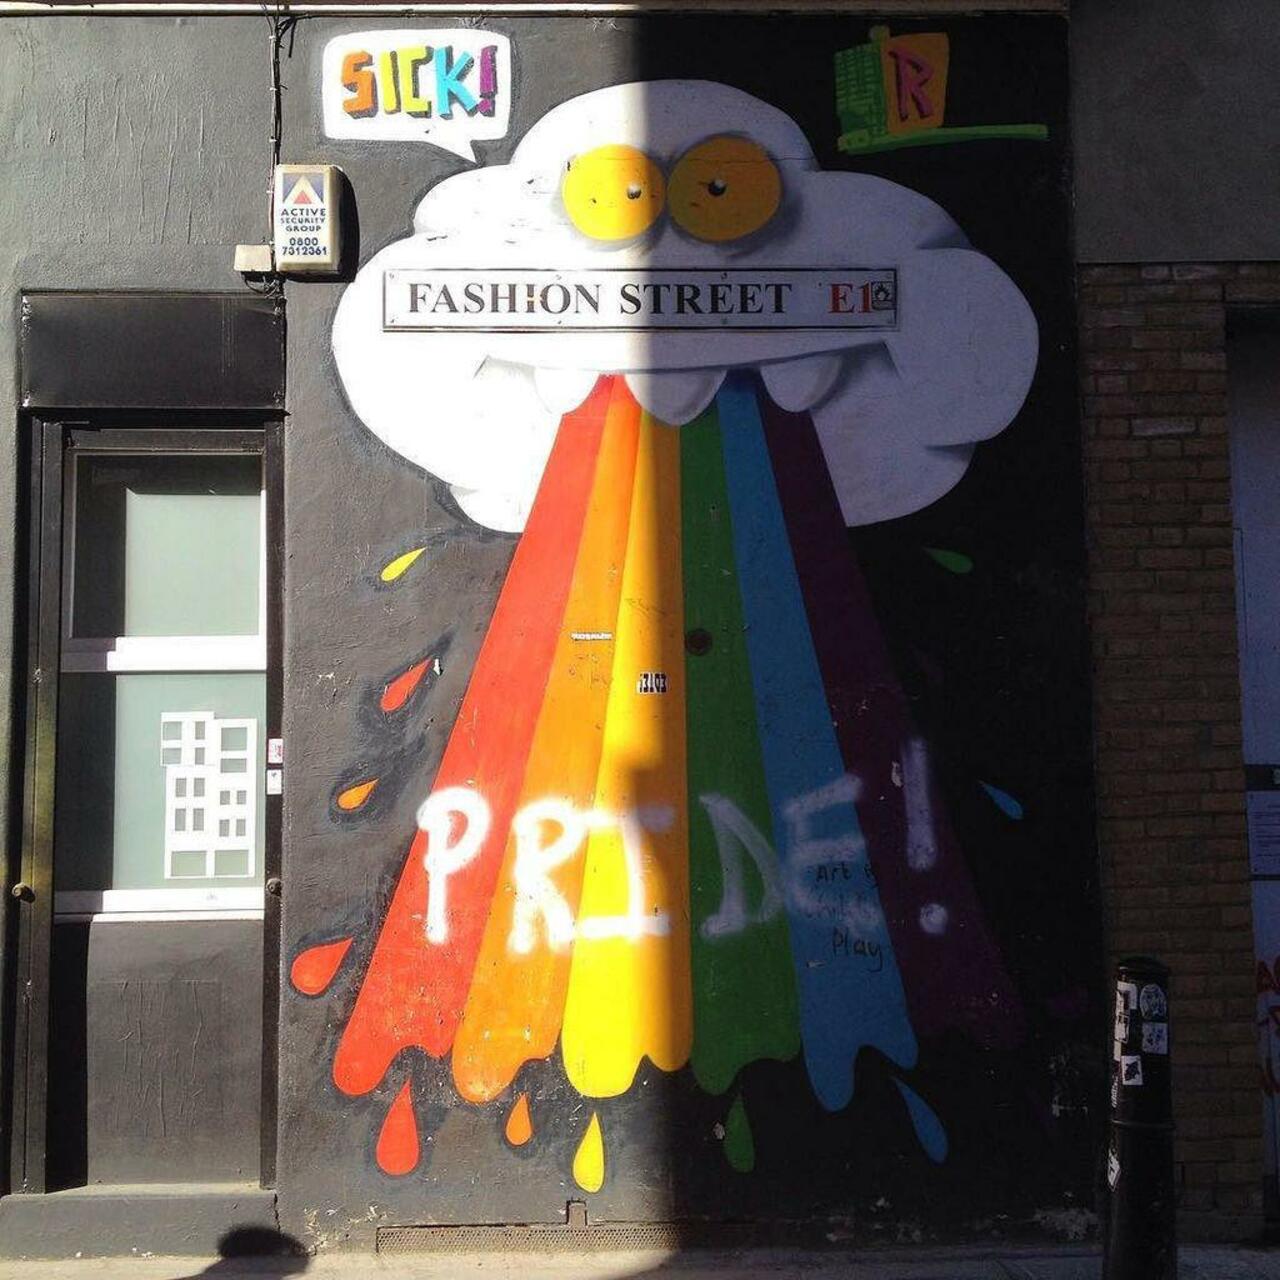 Braaaap  #streetart #graffiti #streetartlondon #london #thisislondon #rainbow by isadarko http://t.co/q9lHhLue0T